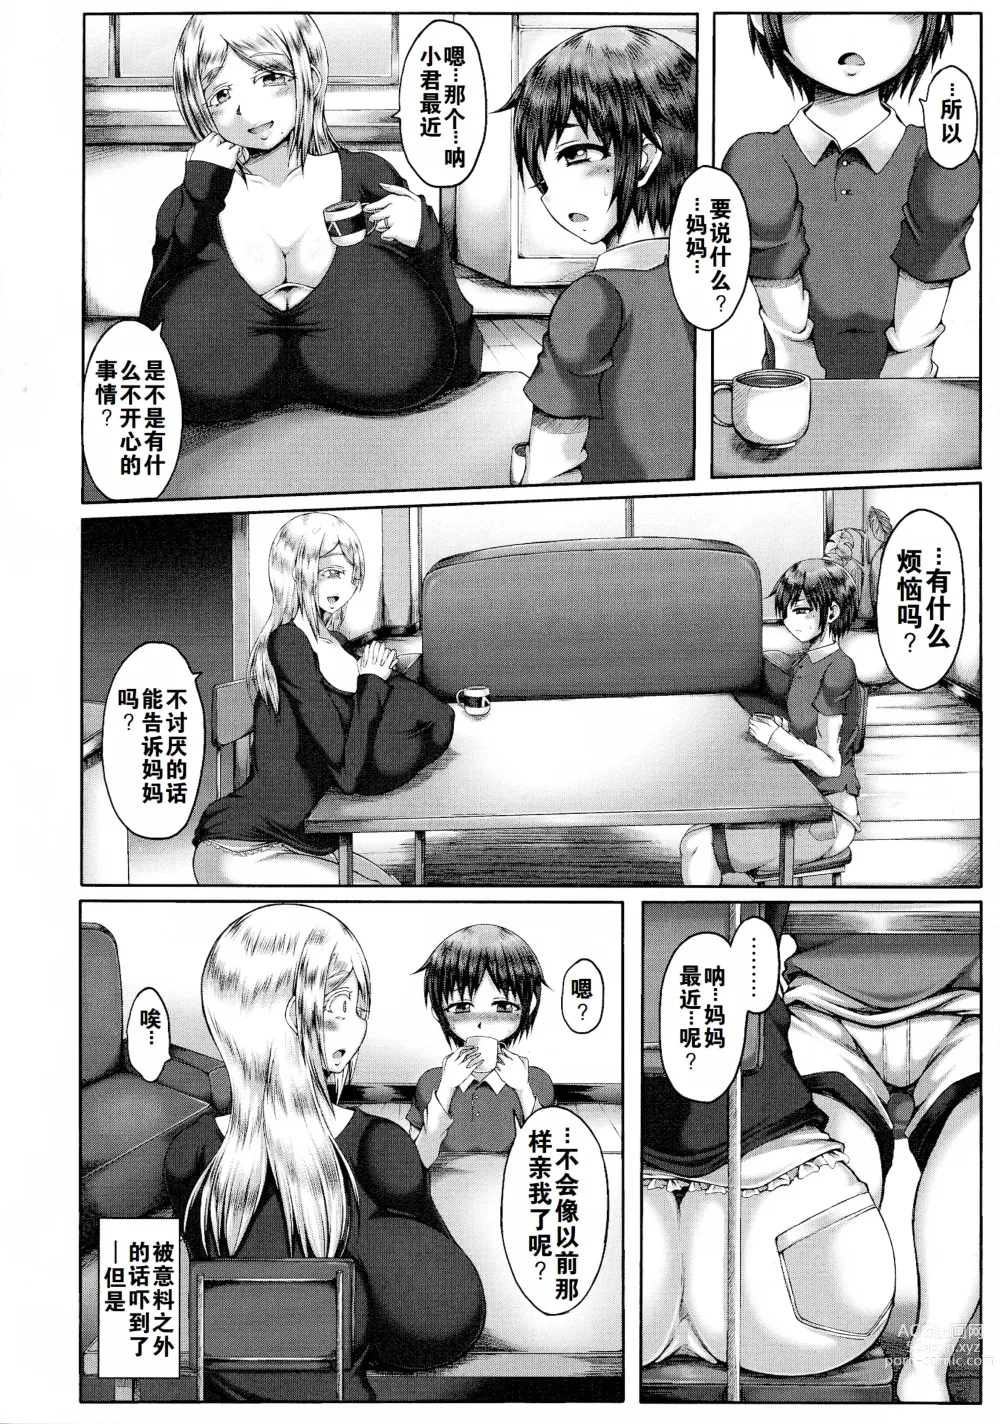 Page 2 of manga 禁断母子姦係+媚臭香ル母子相姦 +母子散图